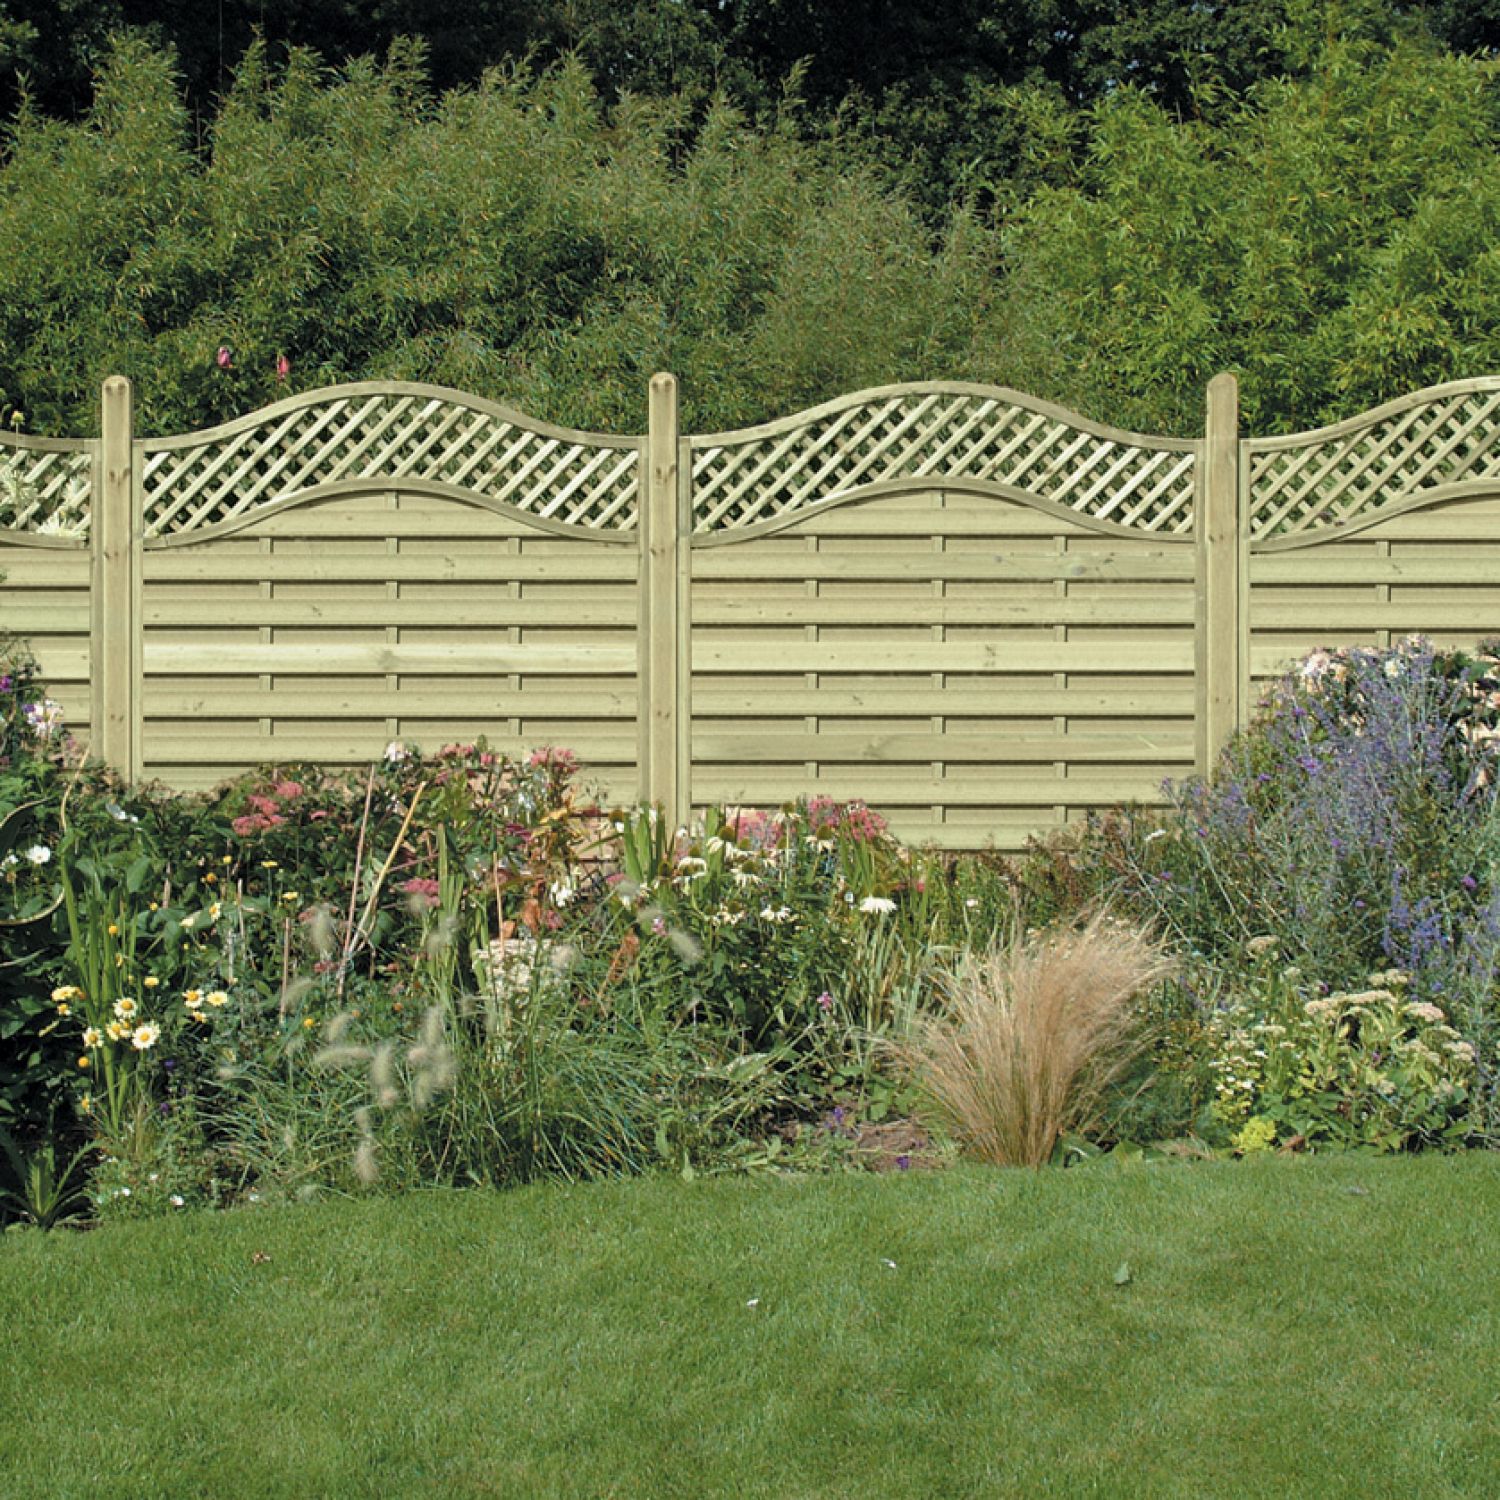 6-foot wide modular fence panels